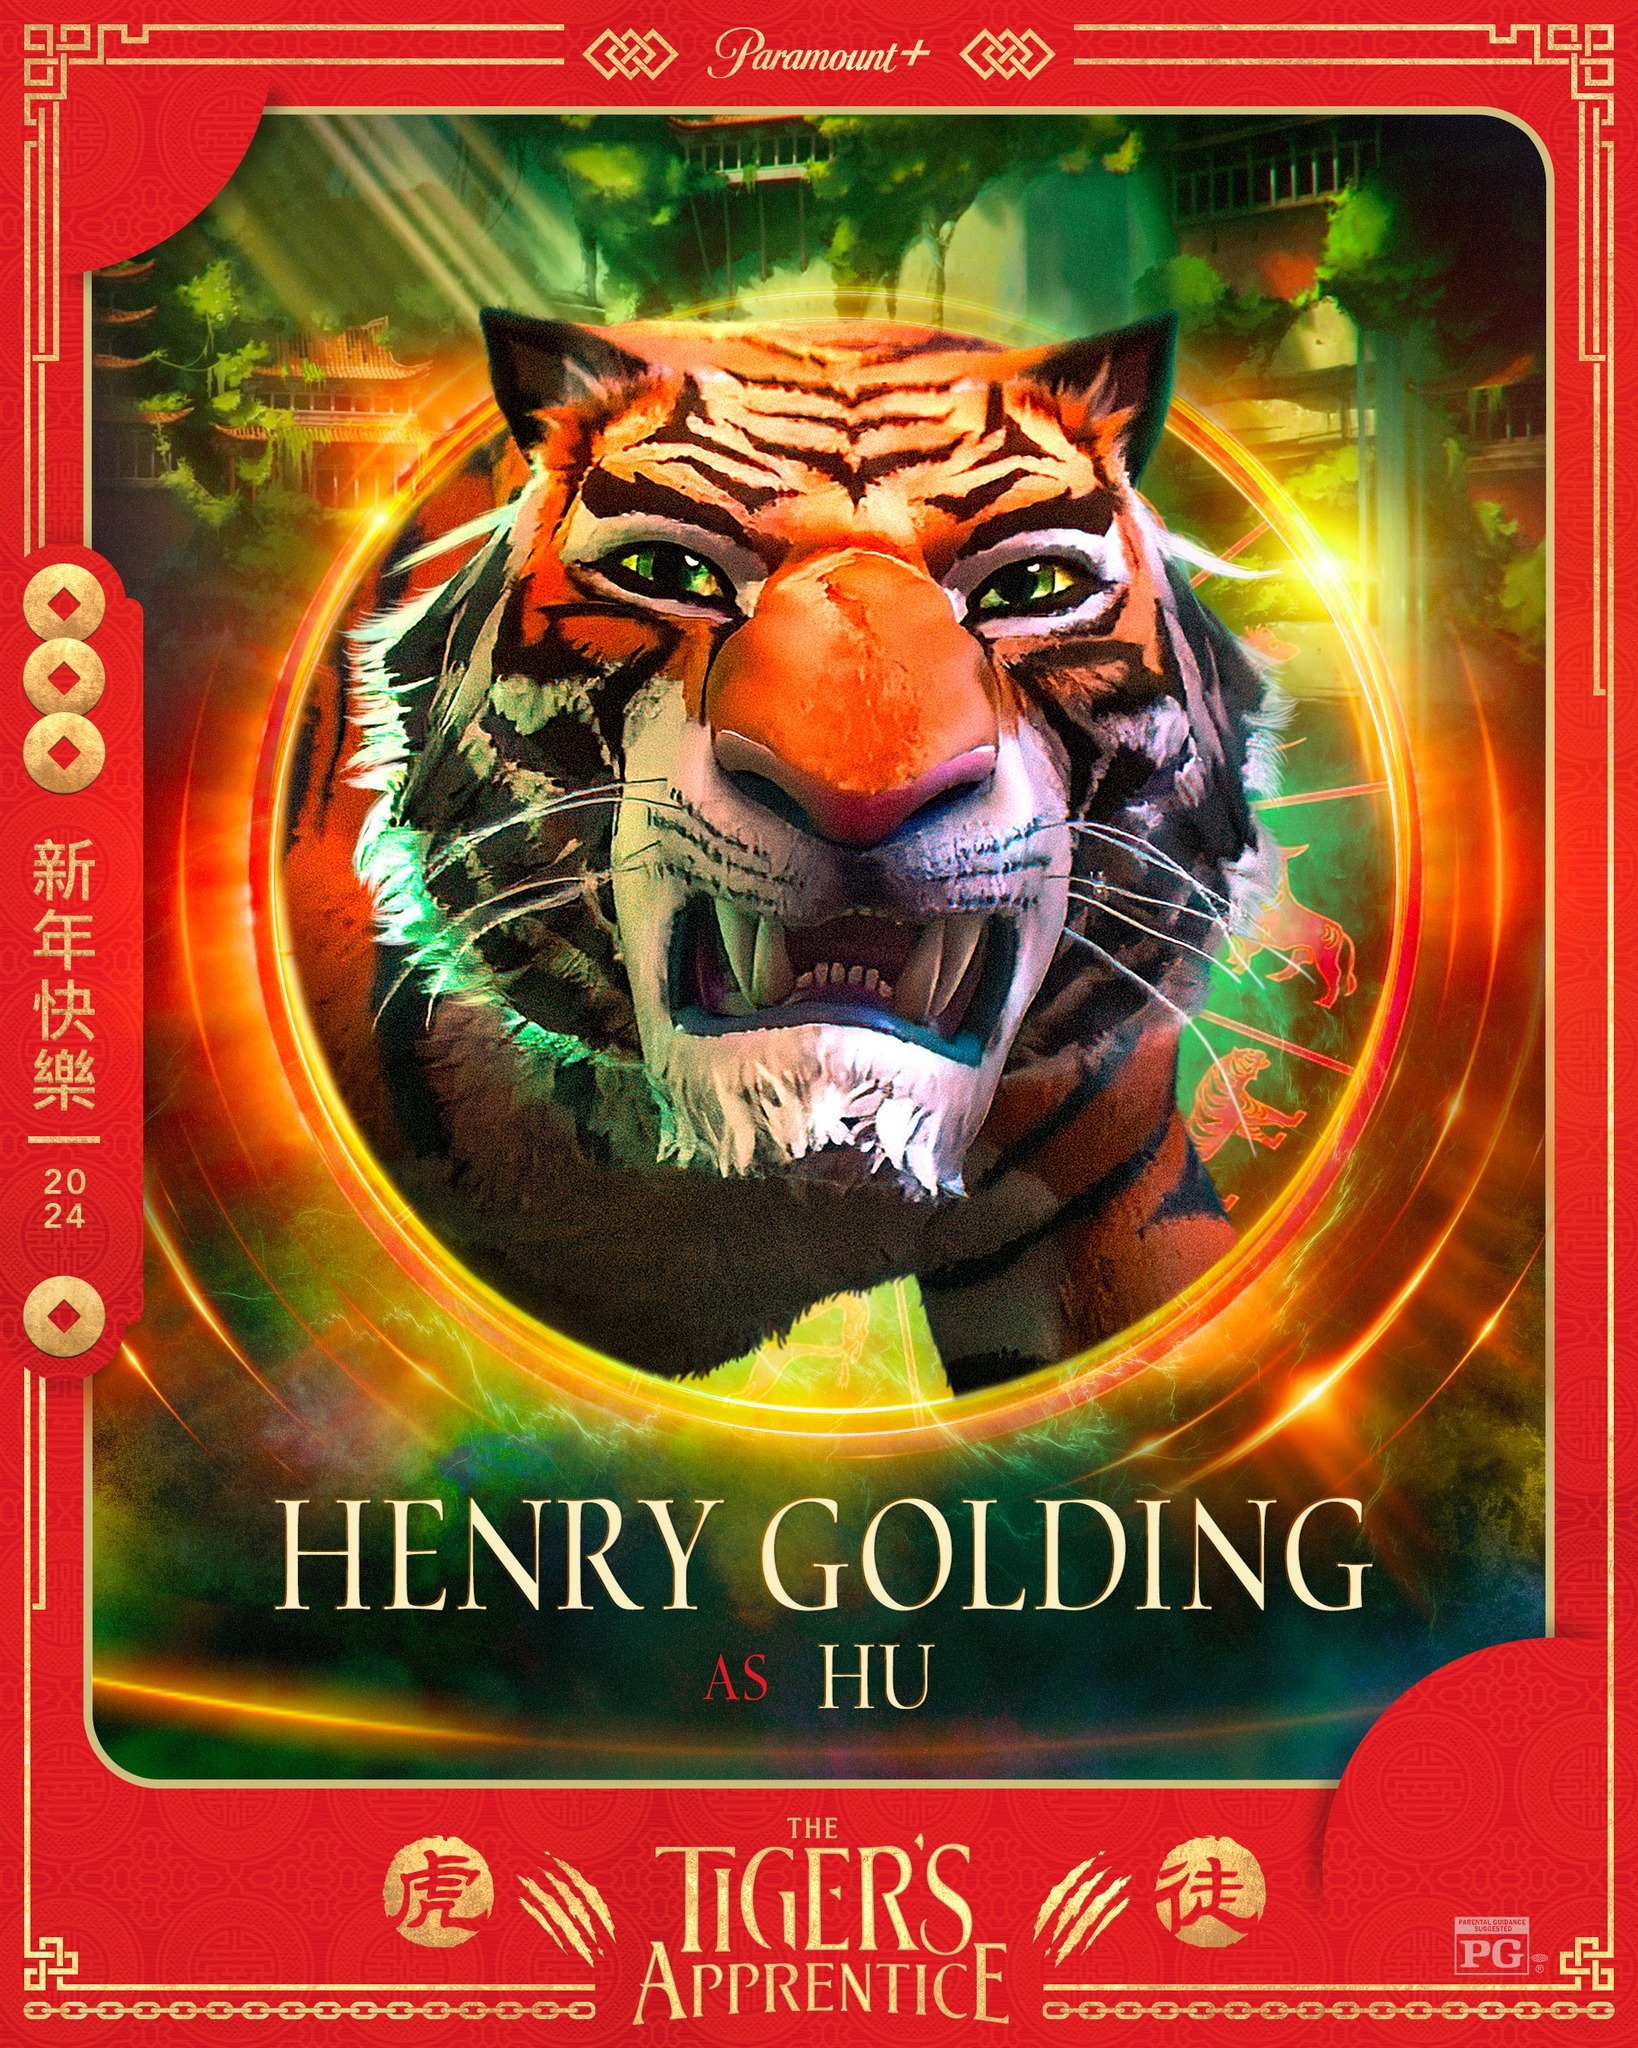 Mega Sized Movie Poster Image for The Tiger's Apprentice (#9 of 18)